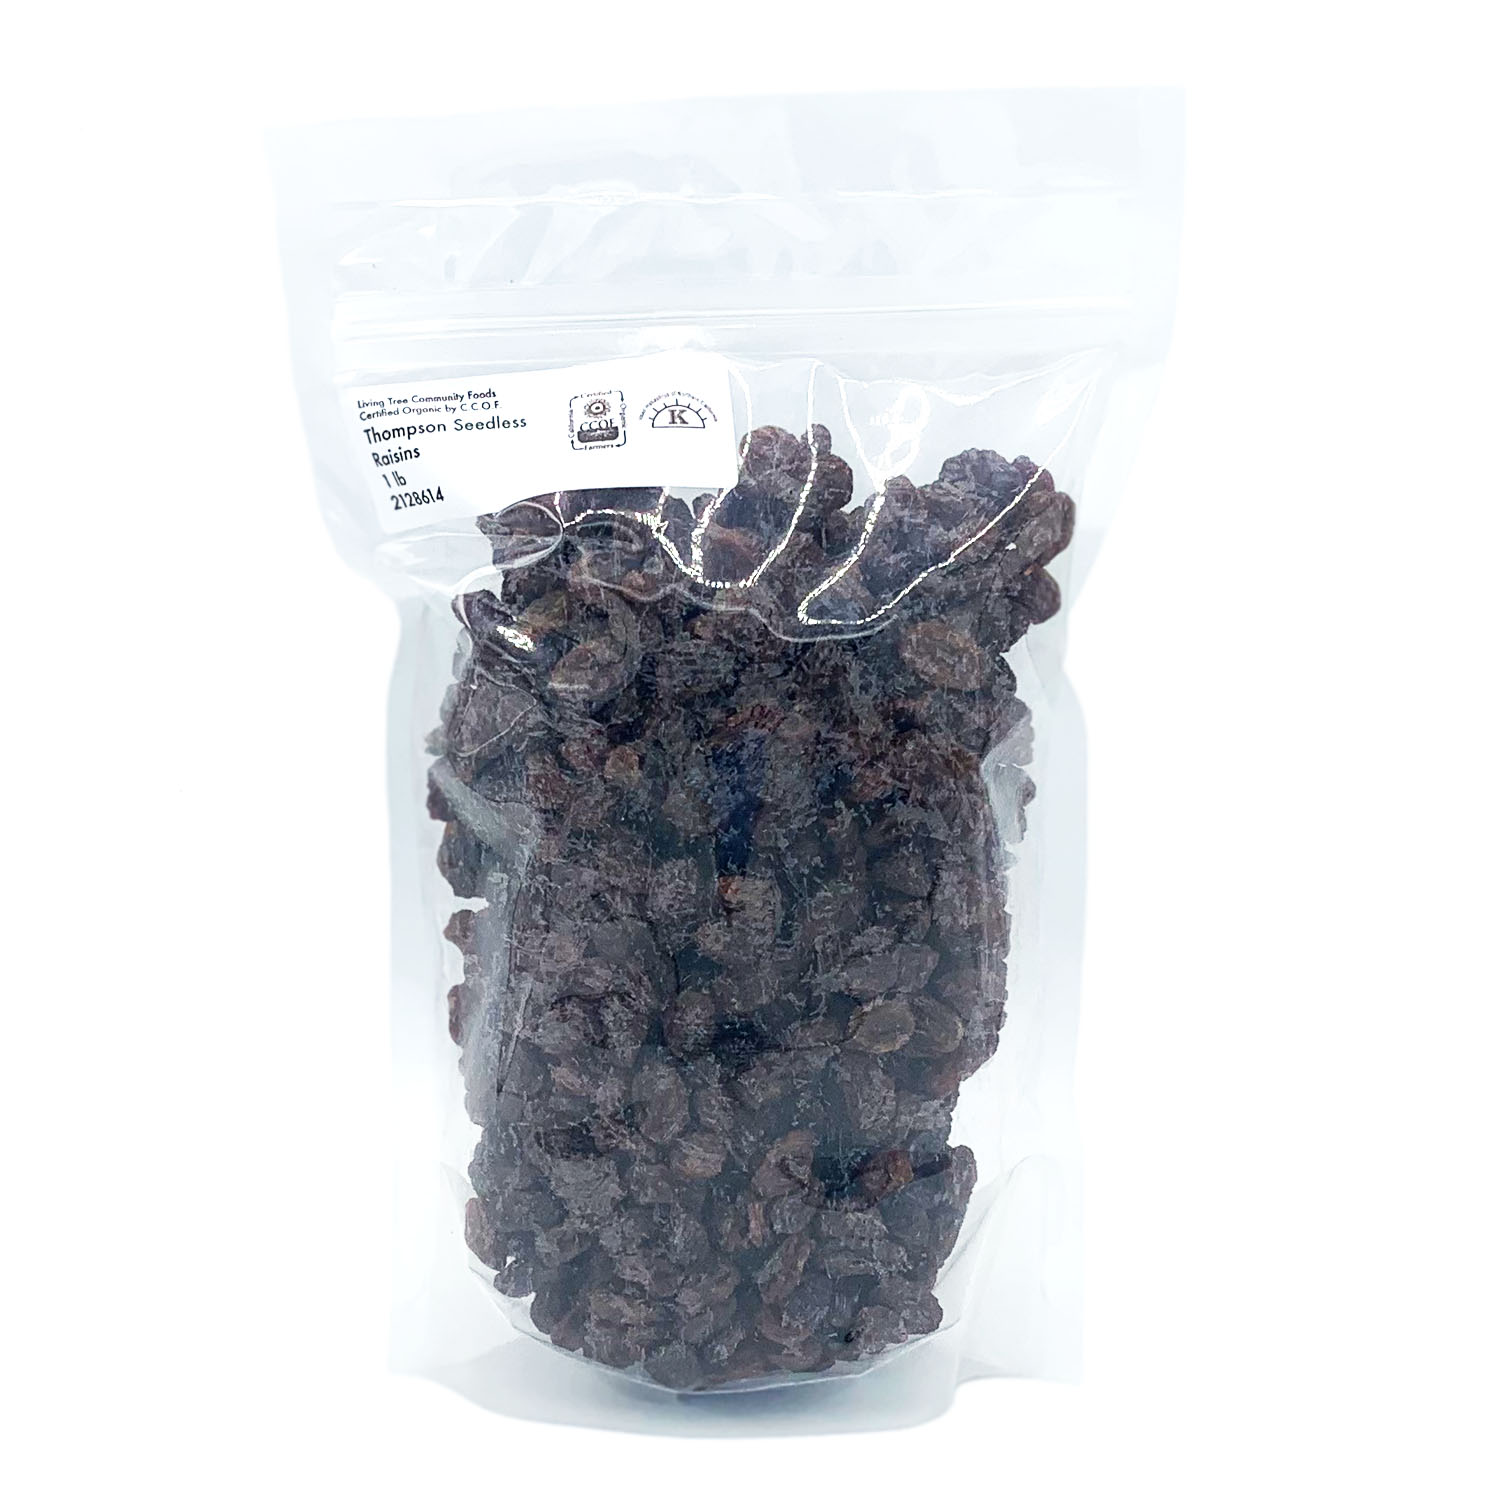 Seedless Raisins - Large Flavorful Raisins 